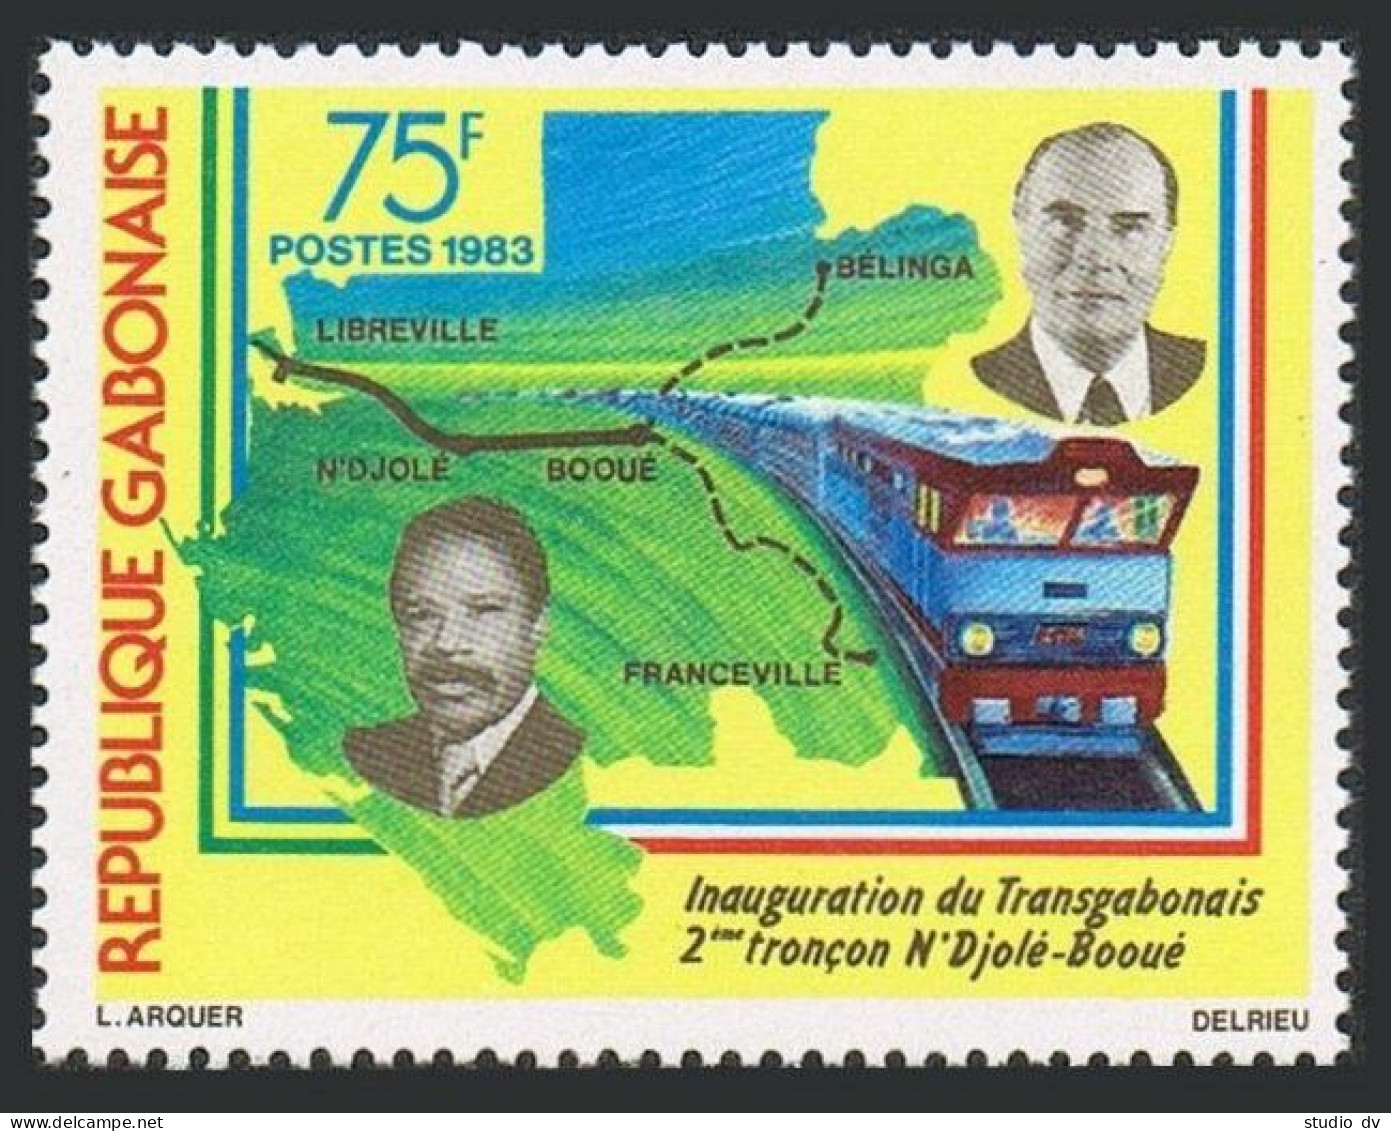 Gabon 527,MNH.Michel 846. Trans-Gabon Railroad,1983.Presidents,map,train. - Gabon